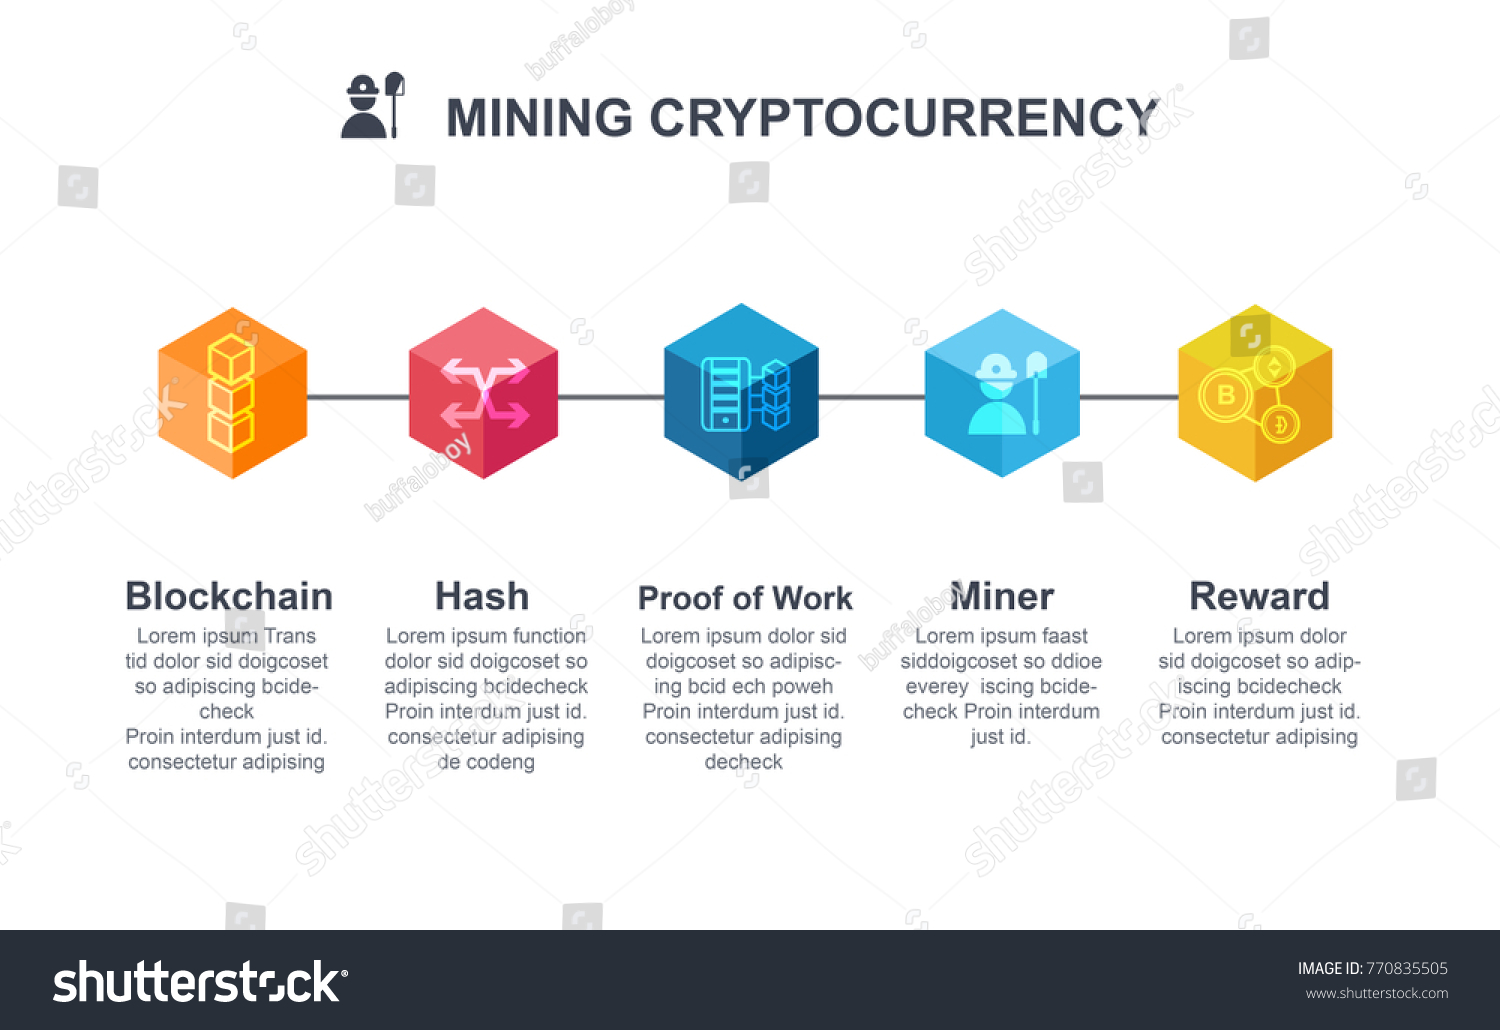 Blockchain Infographic Cryptocurrency | Blockchain news 2020